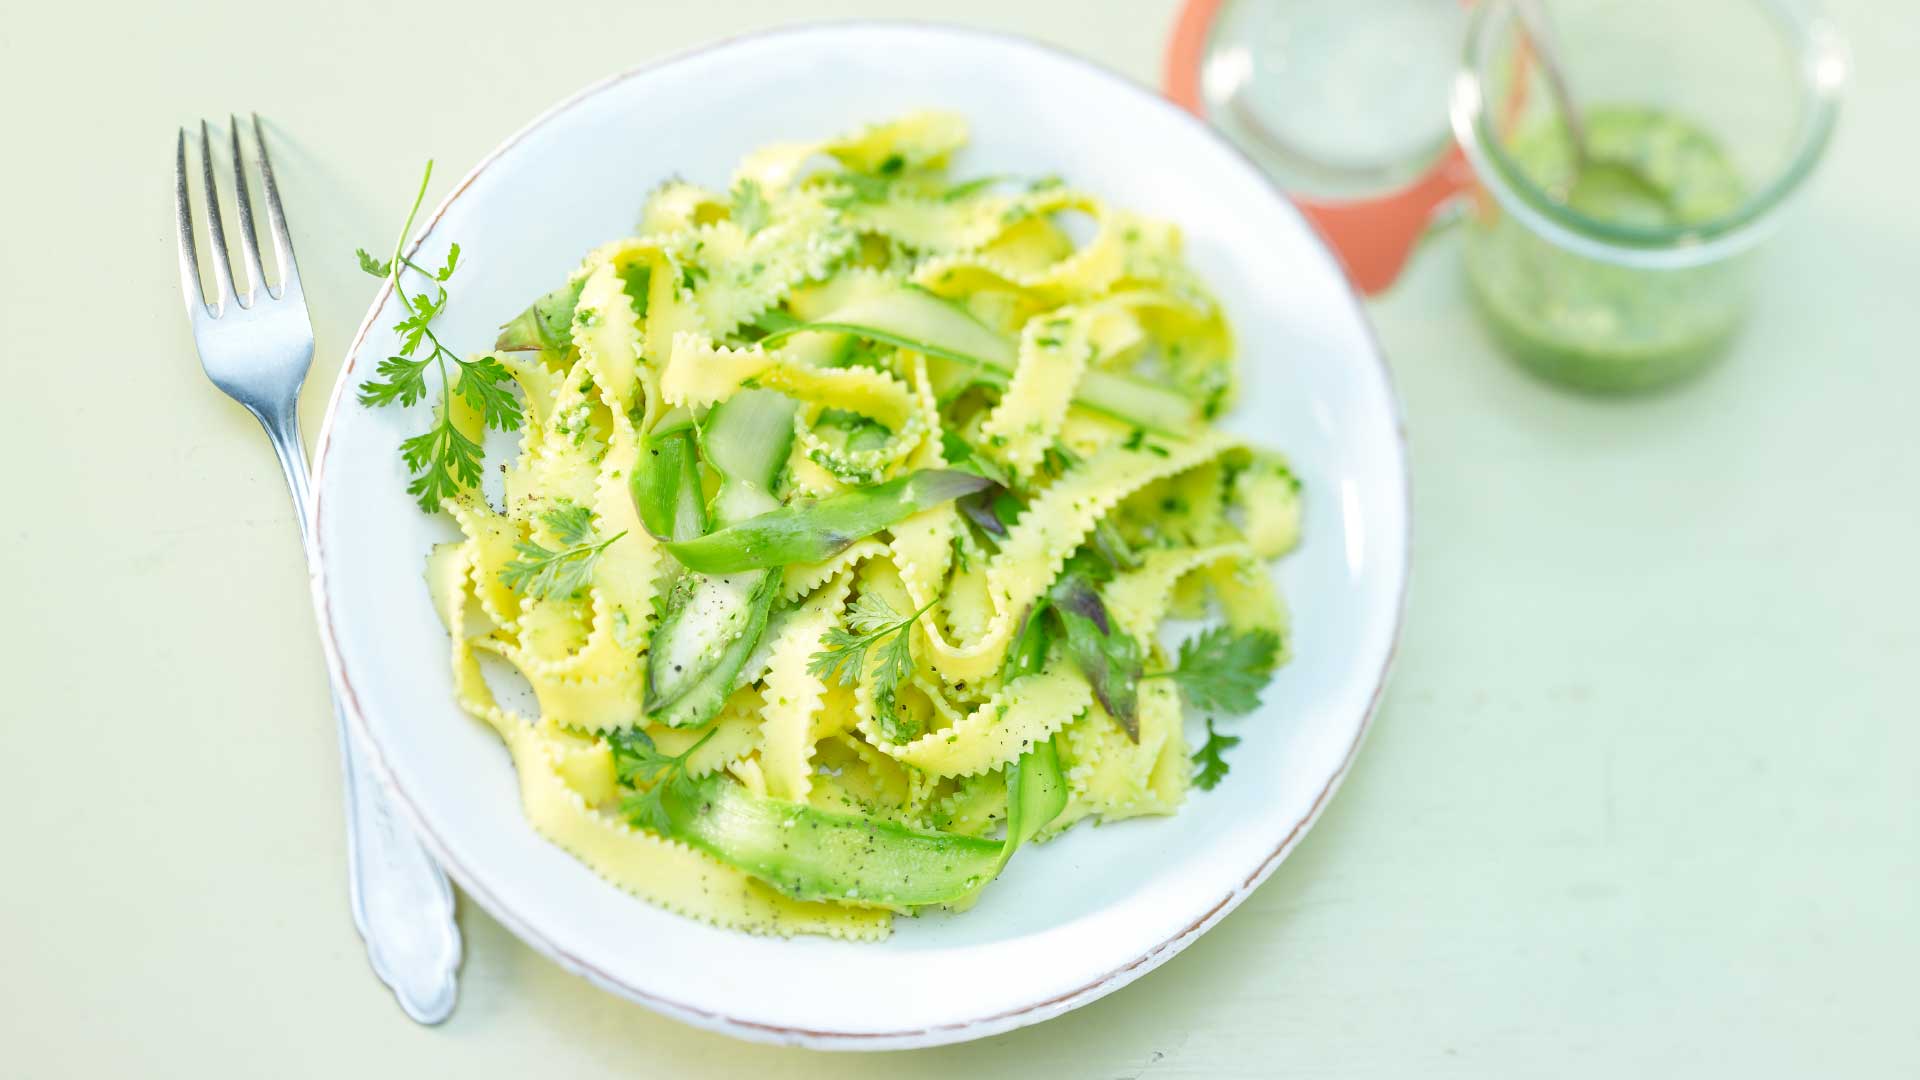 Asparagus noodles with herb pesto